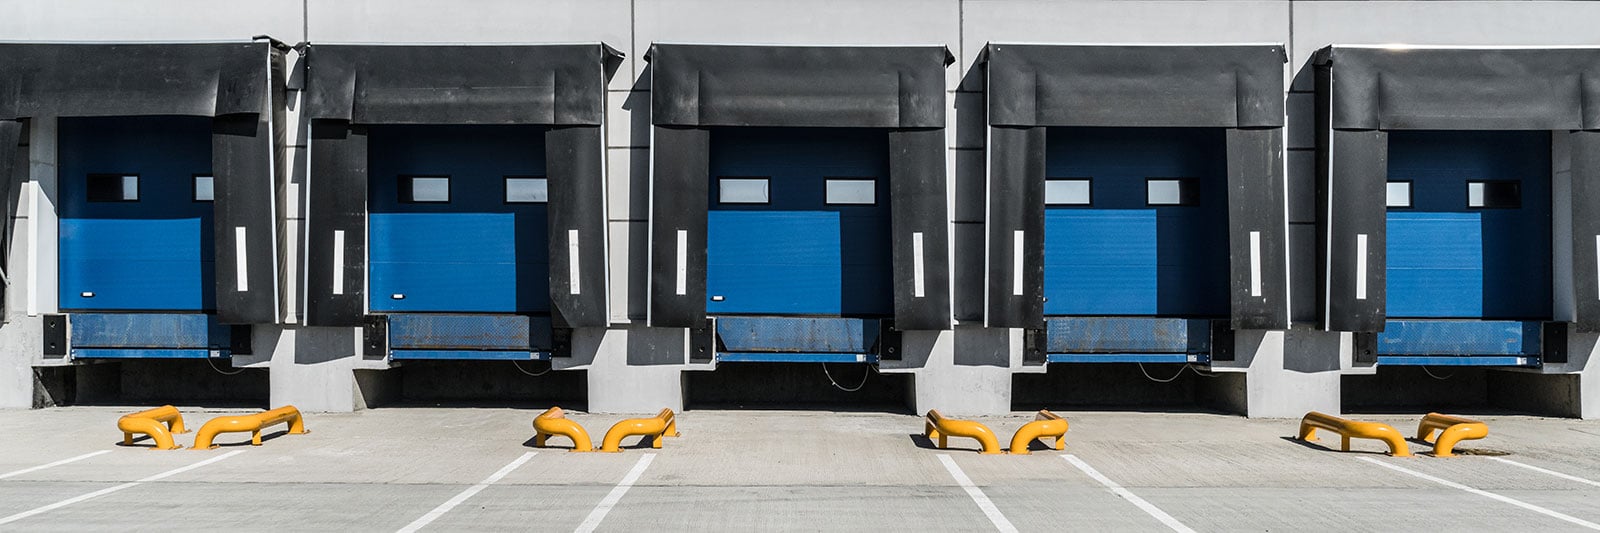 A truck loading dock bay with five blue docks